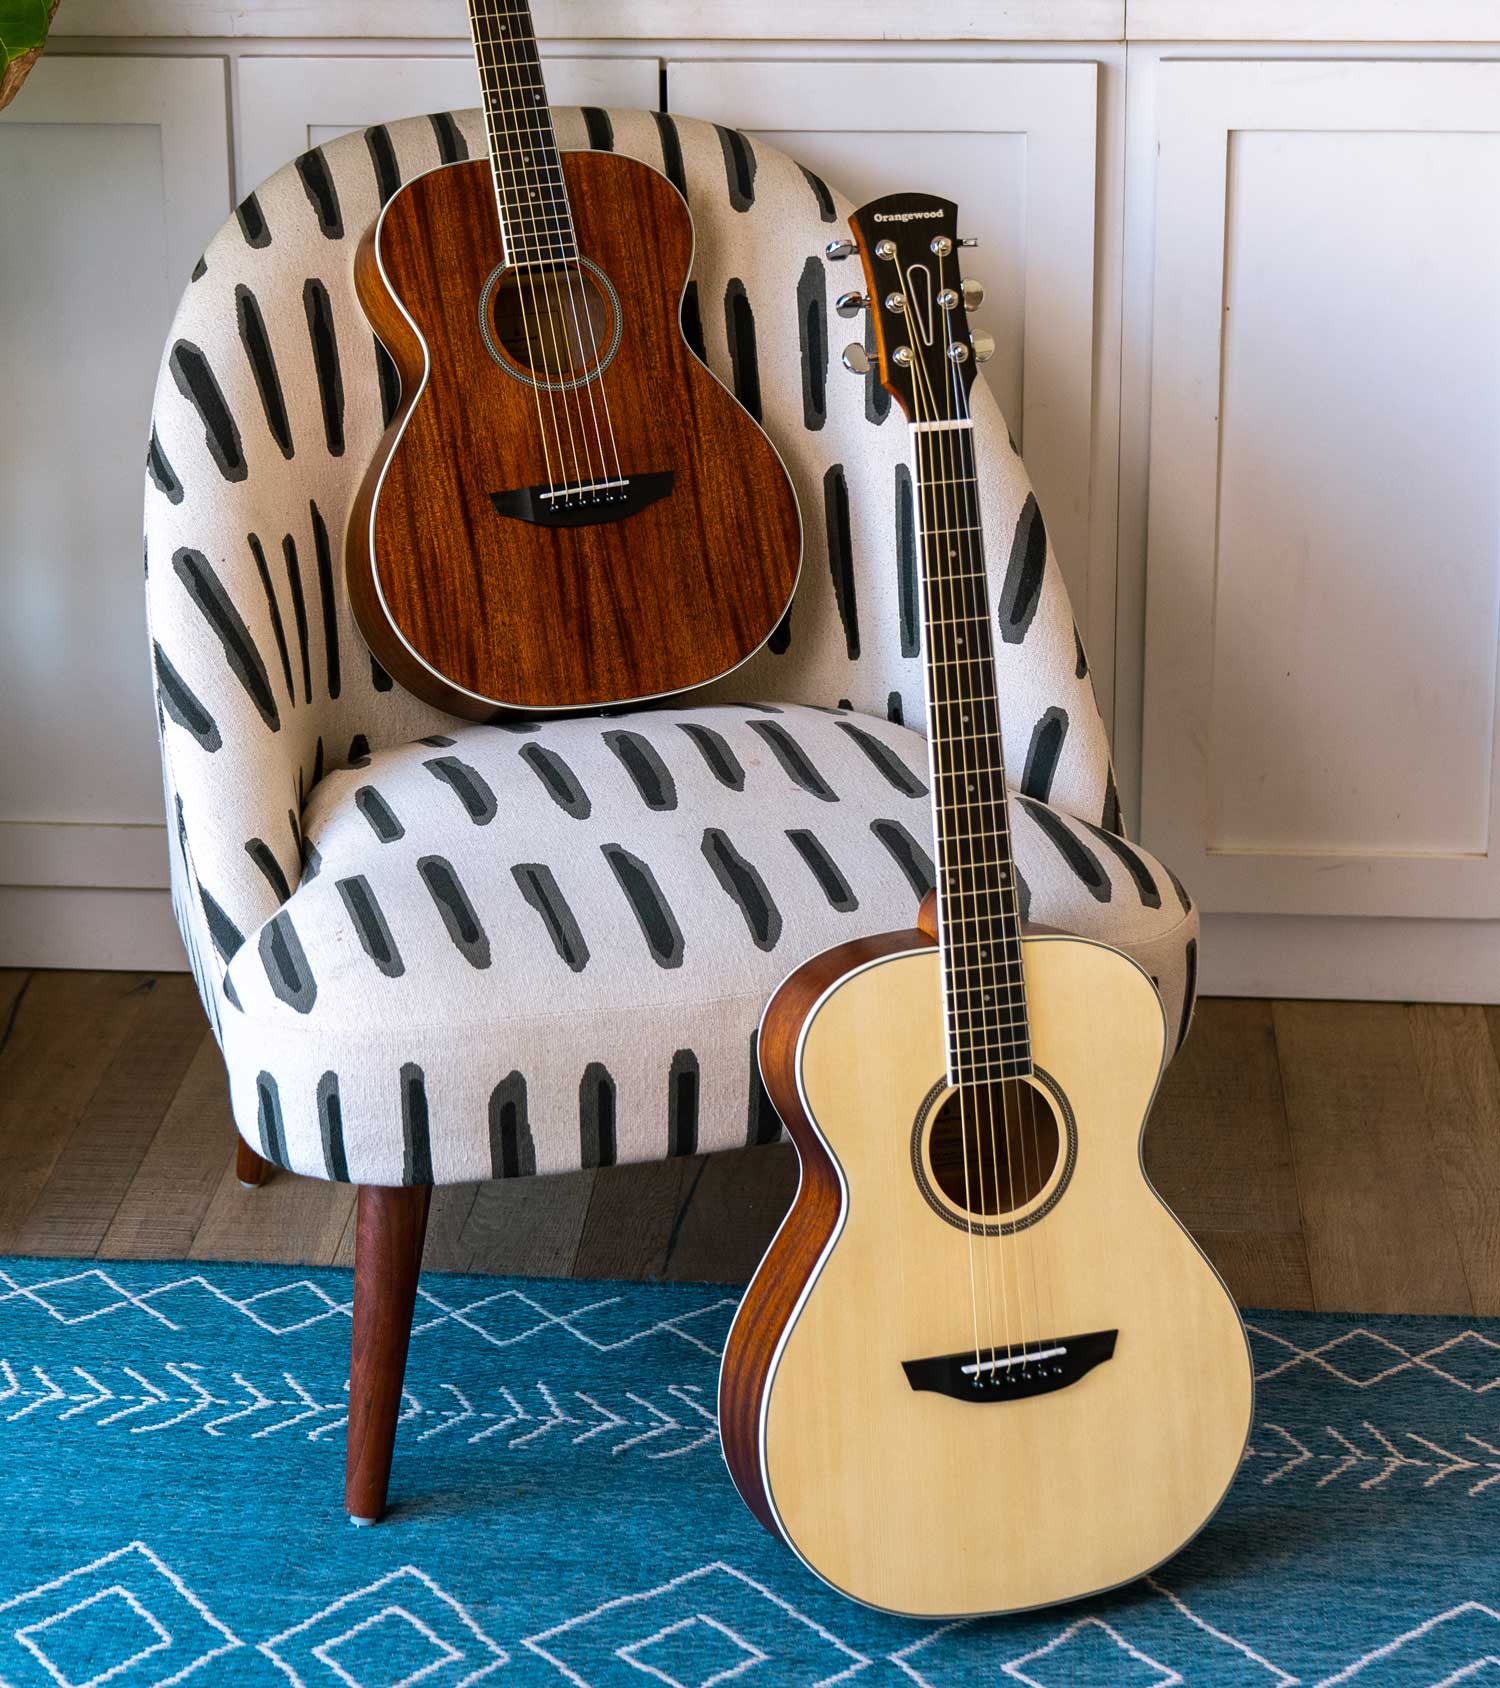 Dana mahogany guitar in a chair and dana spruce guitar on a rug